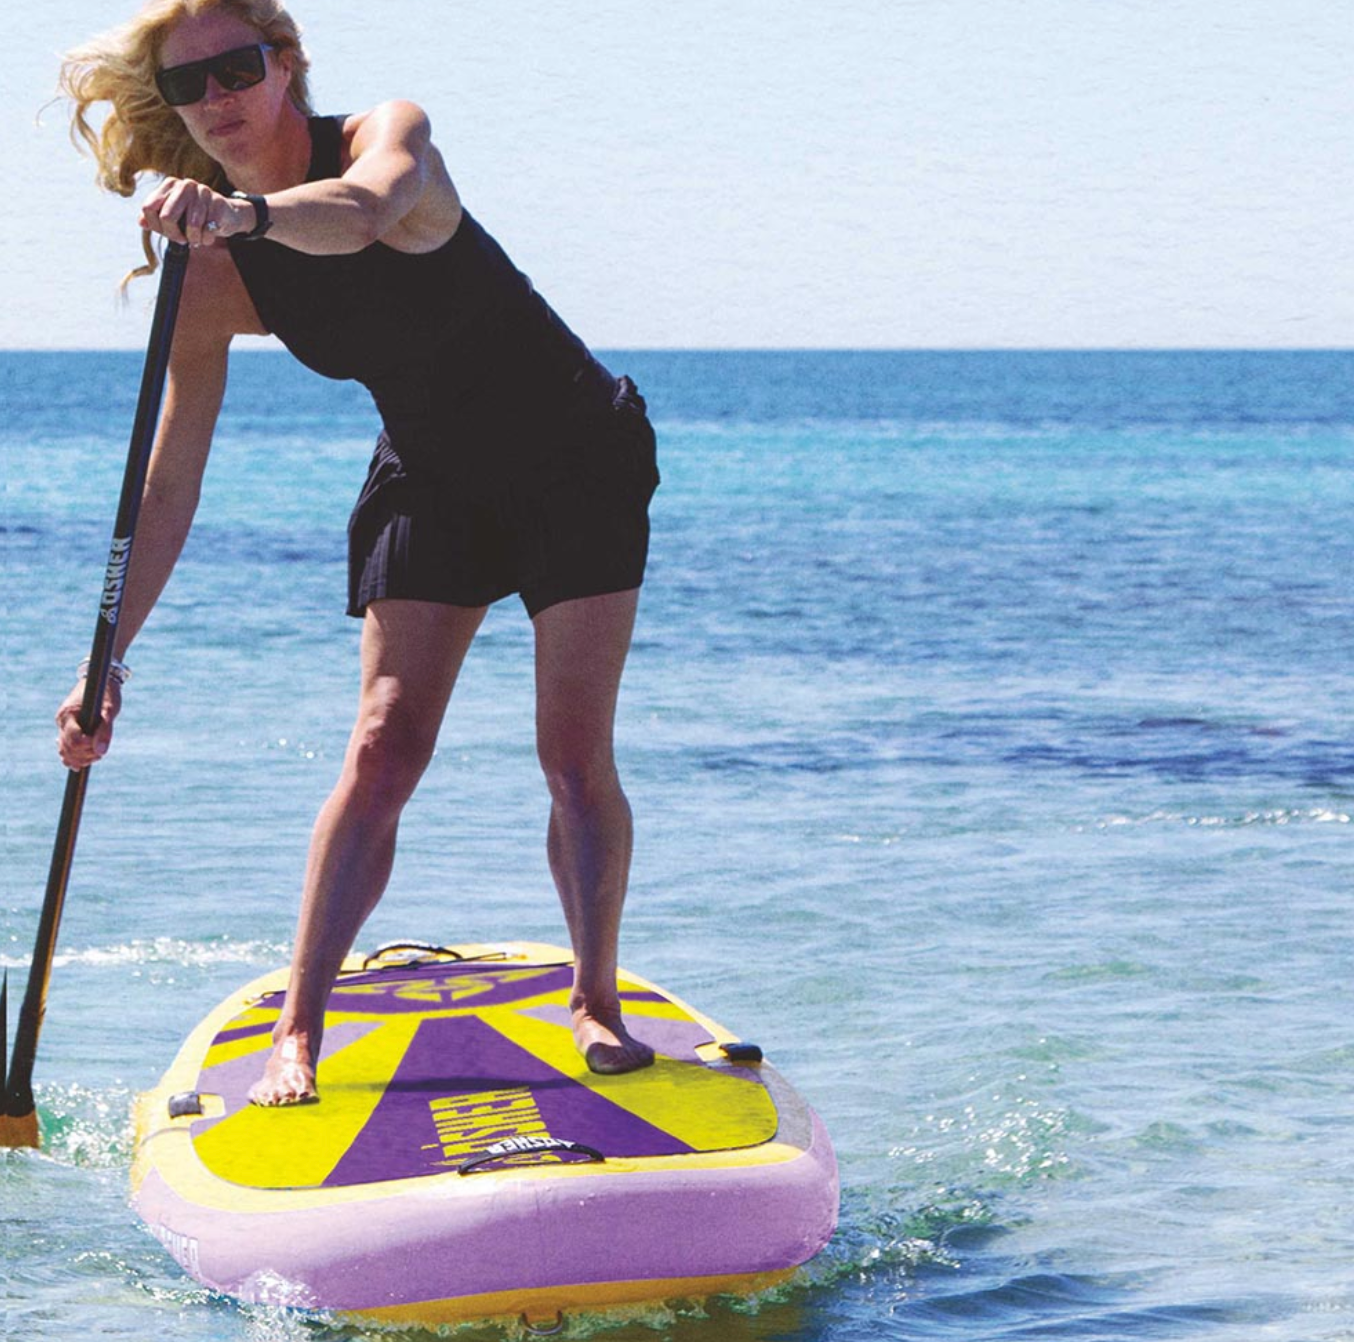 O'Shea HDx Siren 10'0 SUP Inflatable Paddle Board 2022 - Purple